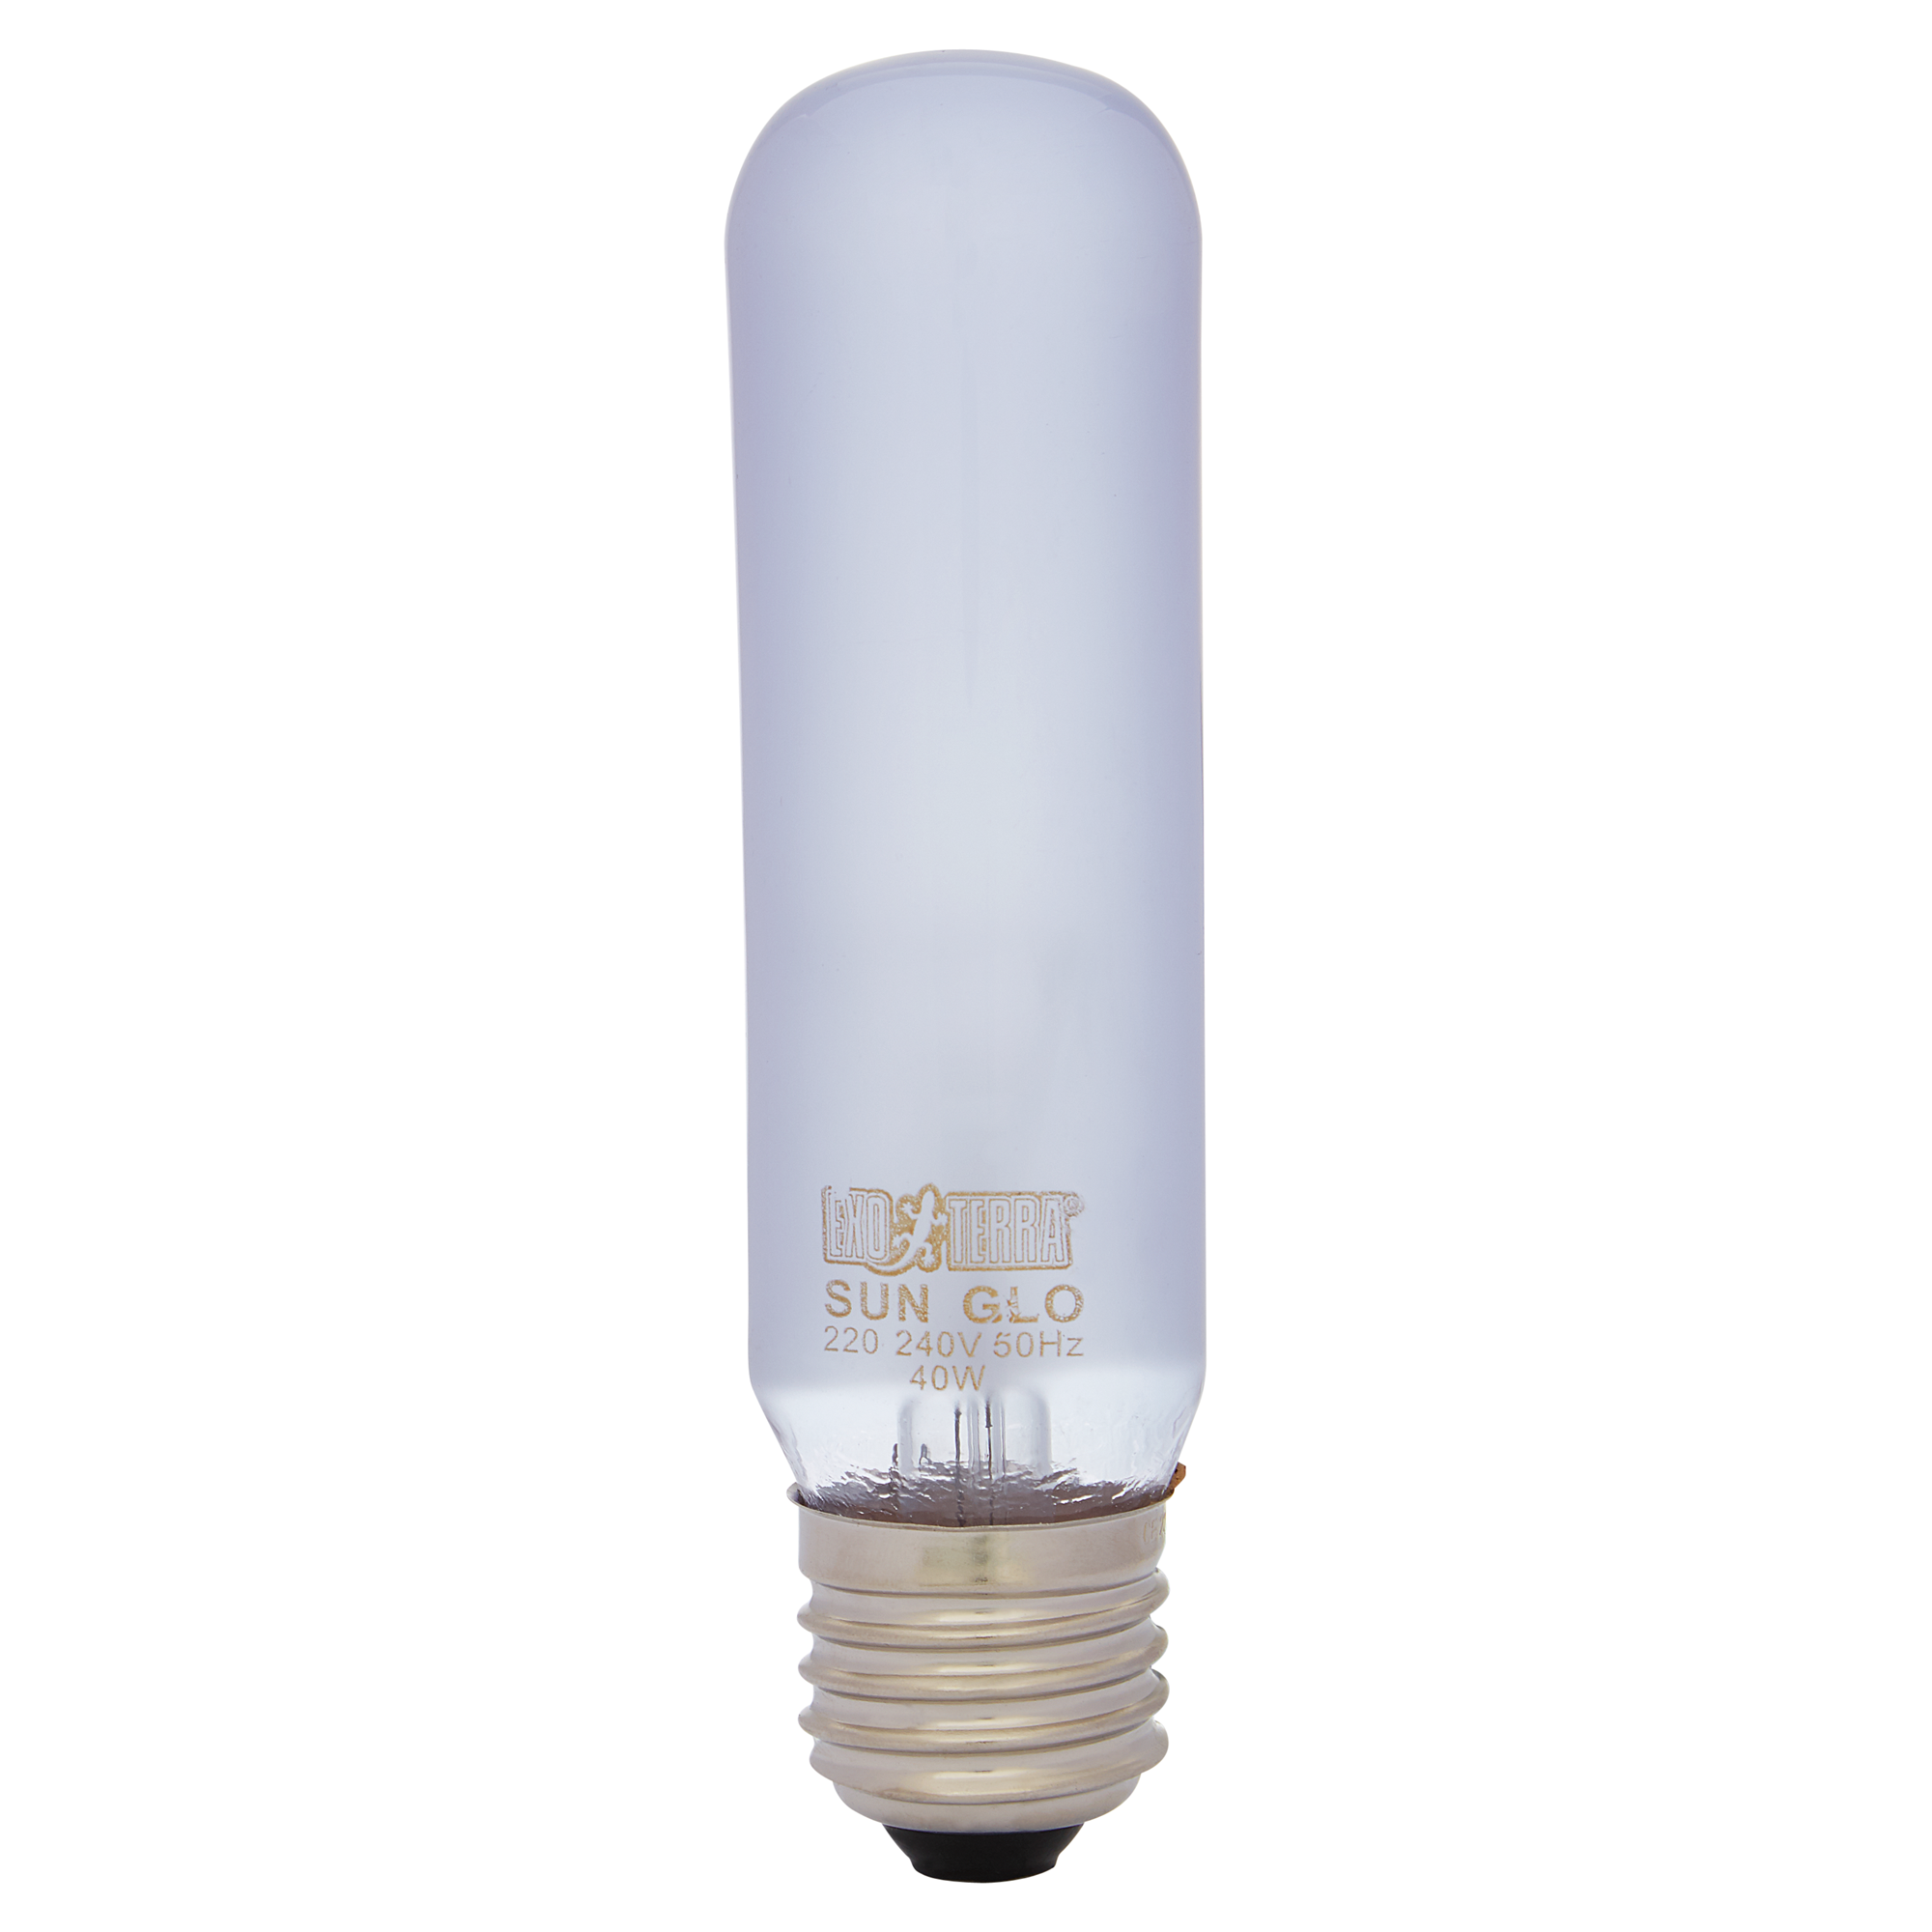 Tageslicht-Wärmelampe 'Daytime Heat Lamp' 40 W + product picture